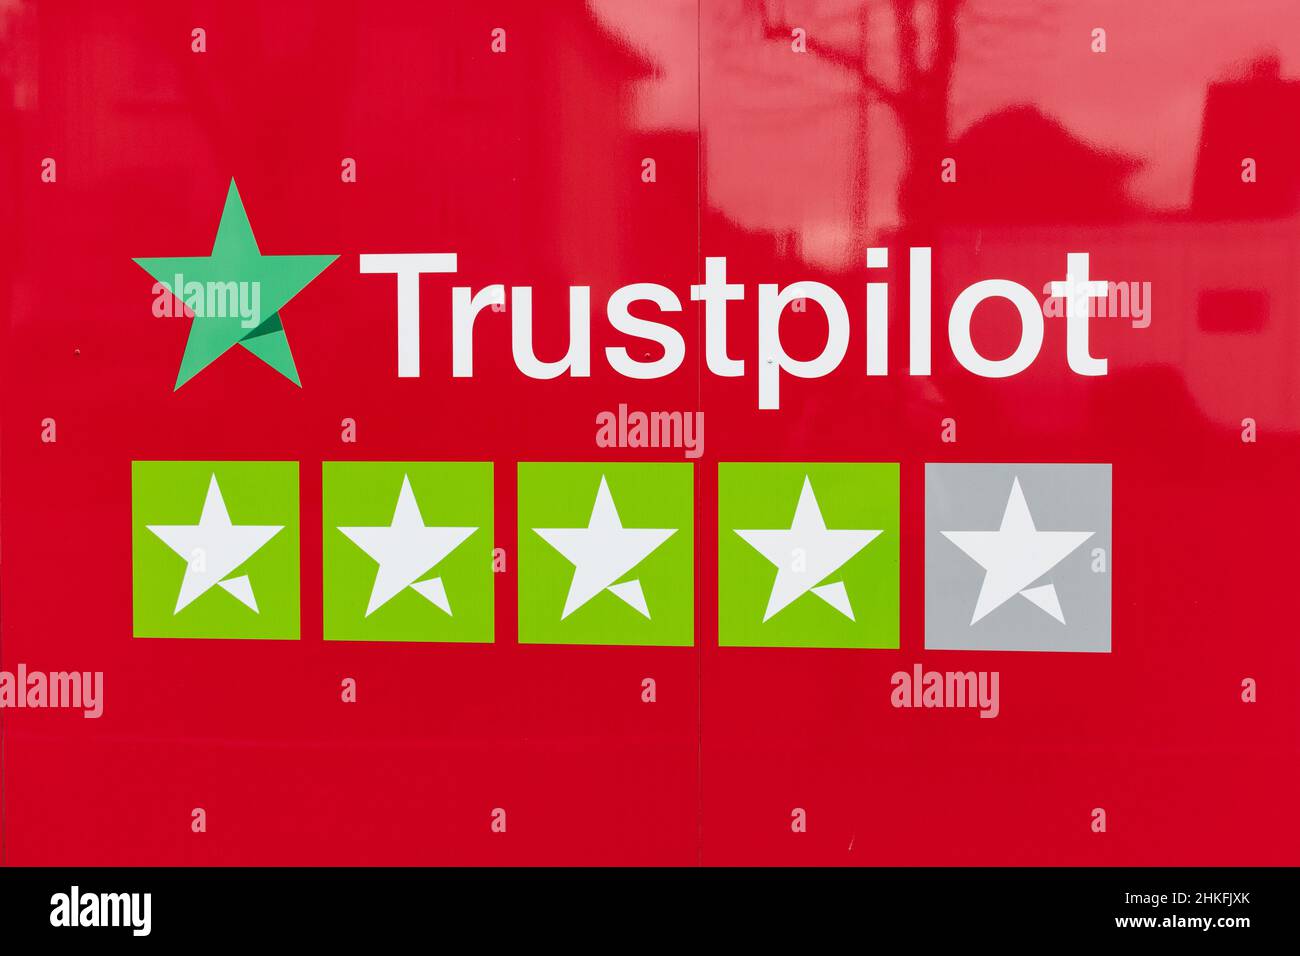 Trustpilot 4 star rating on hoarding around new development, UK Stock Photo